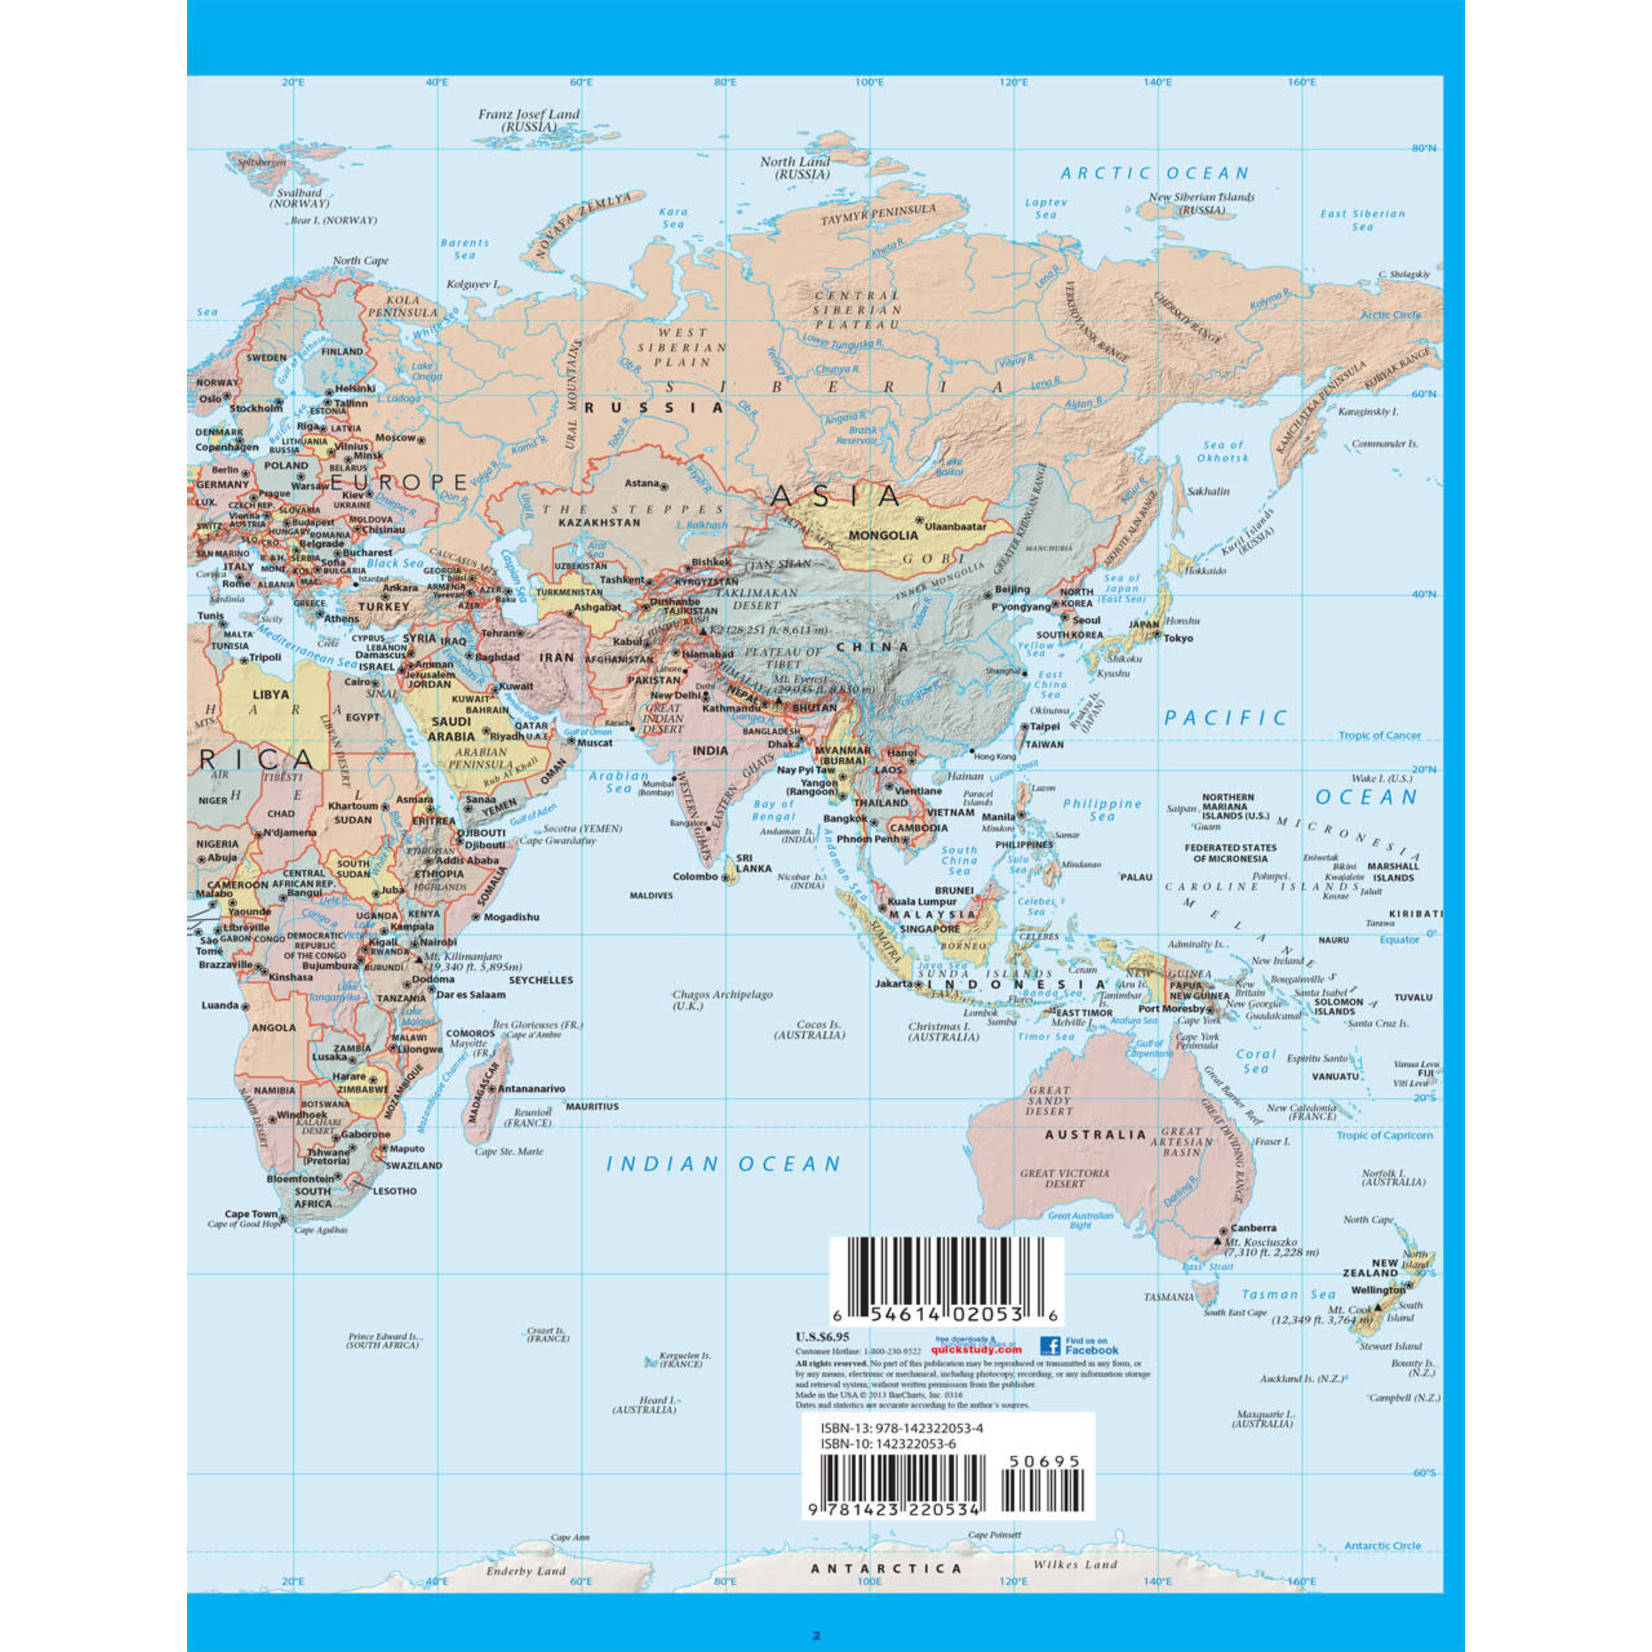 BAR CHARTS QuickStudy | World & U.S. Map Laminated Reference Guide